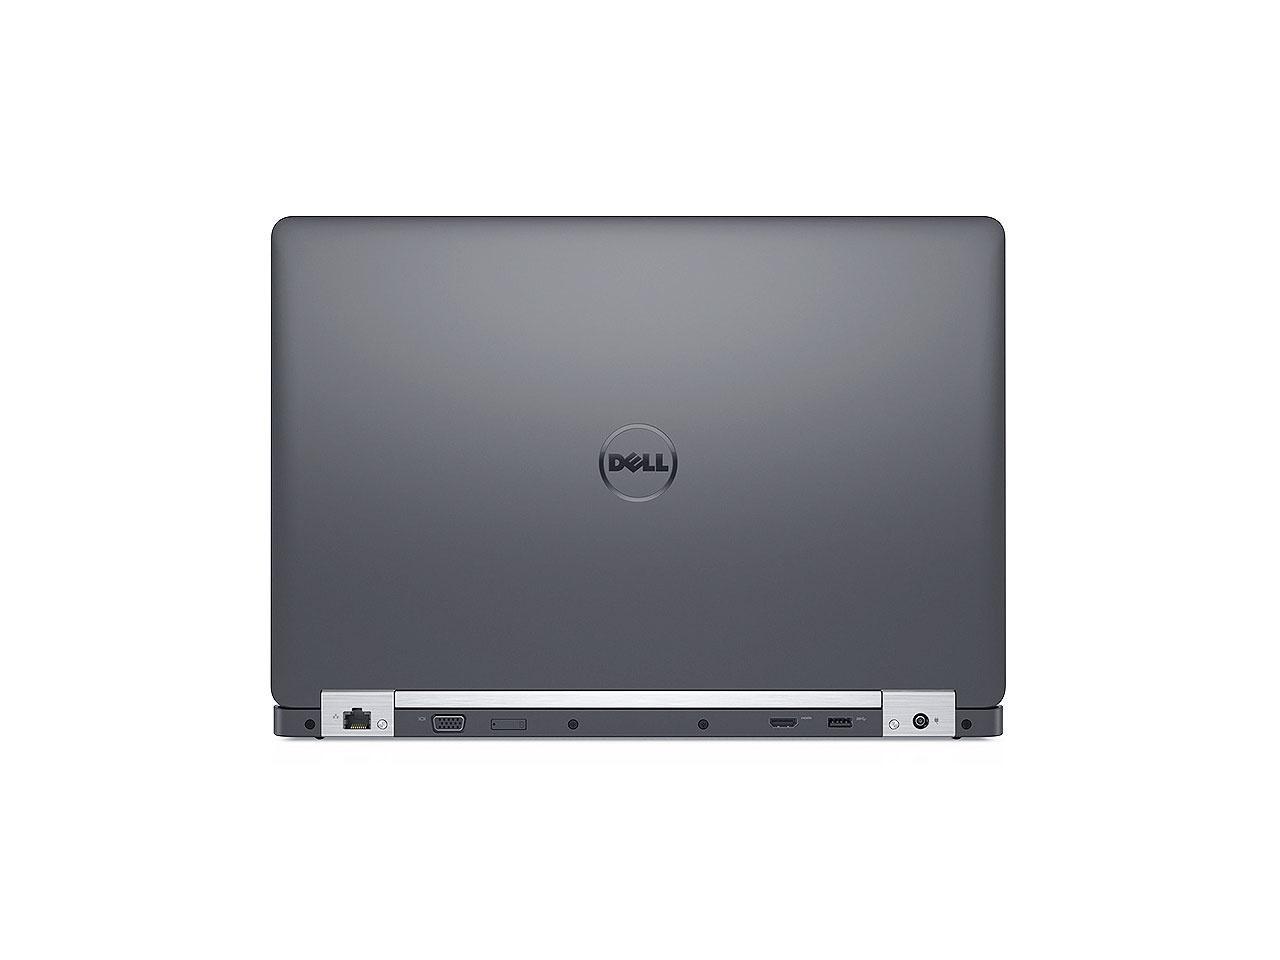 Dell Latitude E5570 Laptop Computer, 2.40 GHz Intel i5 Dual Core Gen 6, 8GB DDR3 RAM, 256GB SSD Hard Drive, Windows 10 Professional 64 Bit, 15" Screen (Grade B)